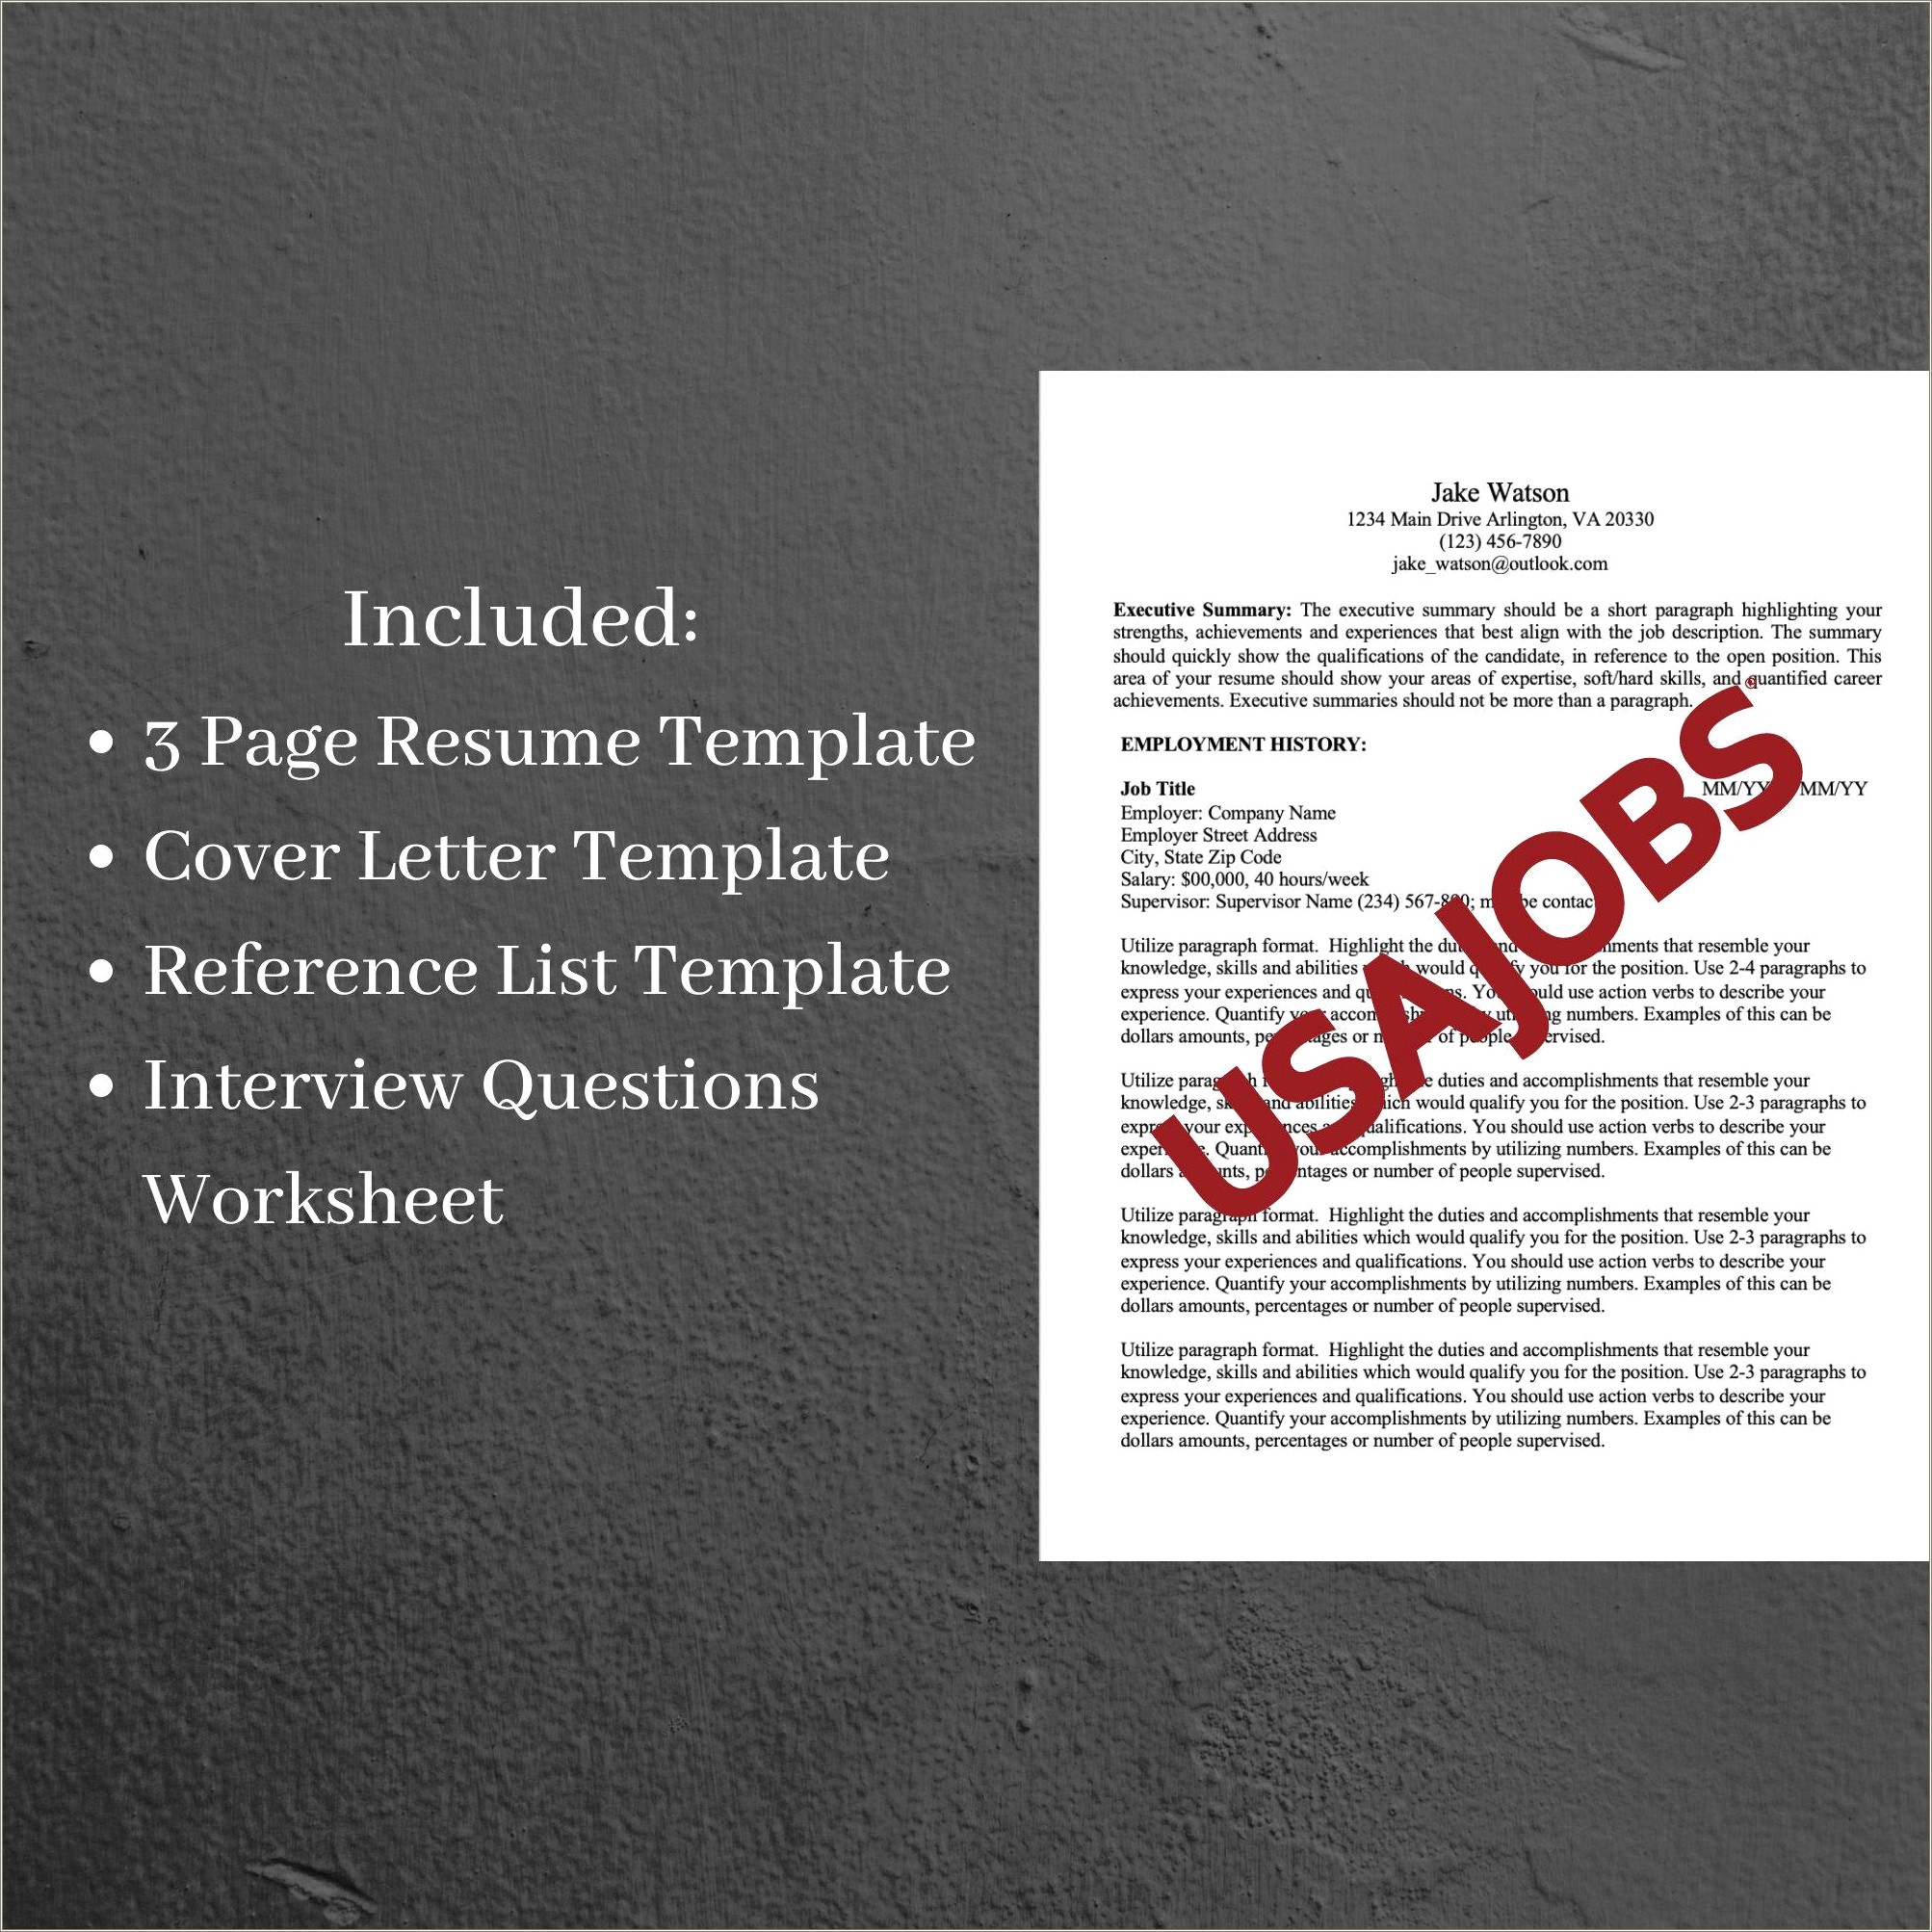 Best Resume Format For Usa Jobs